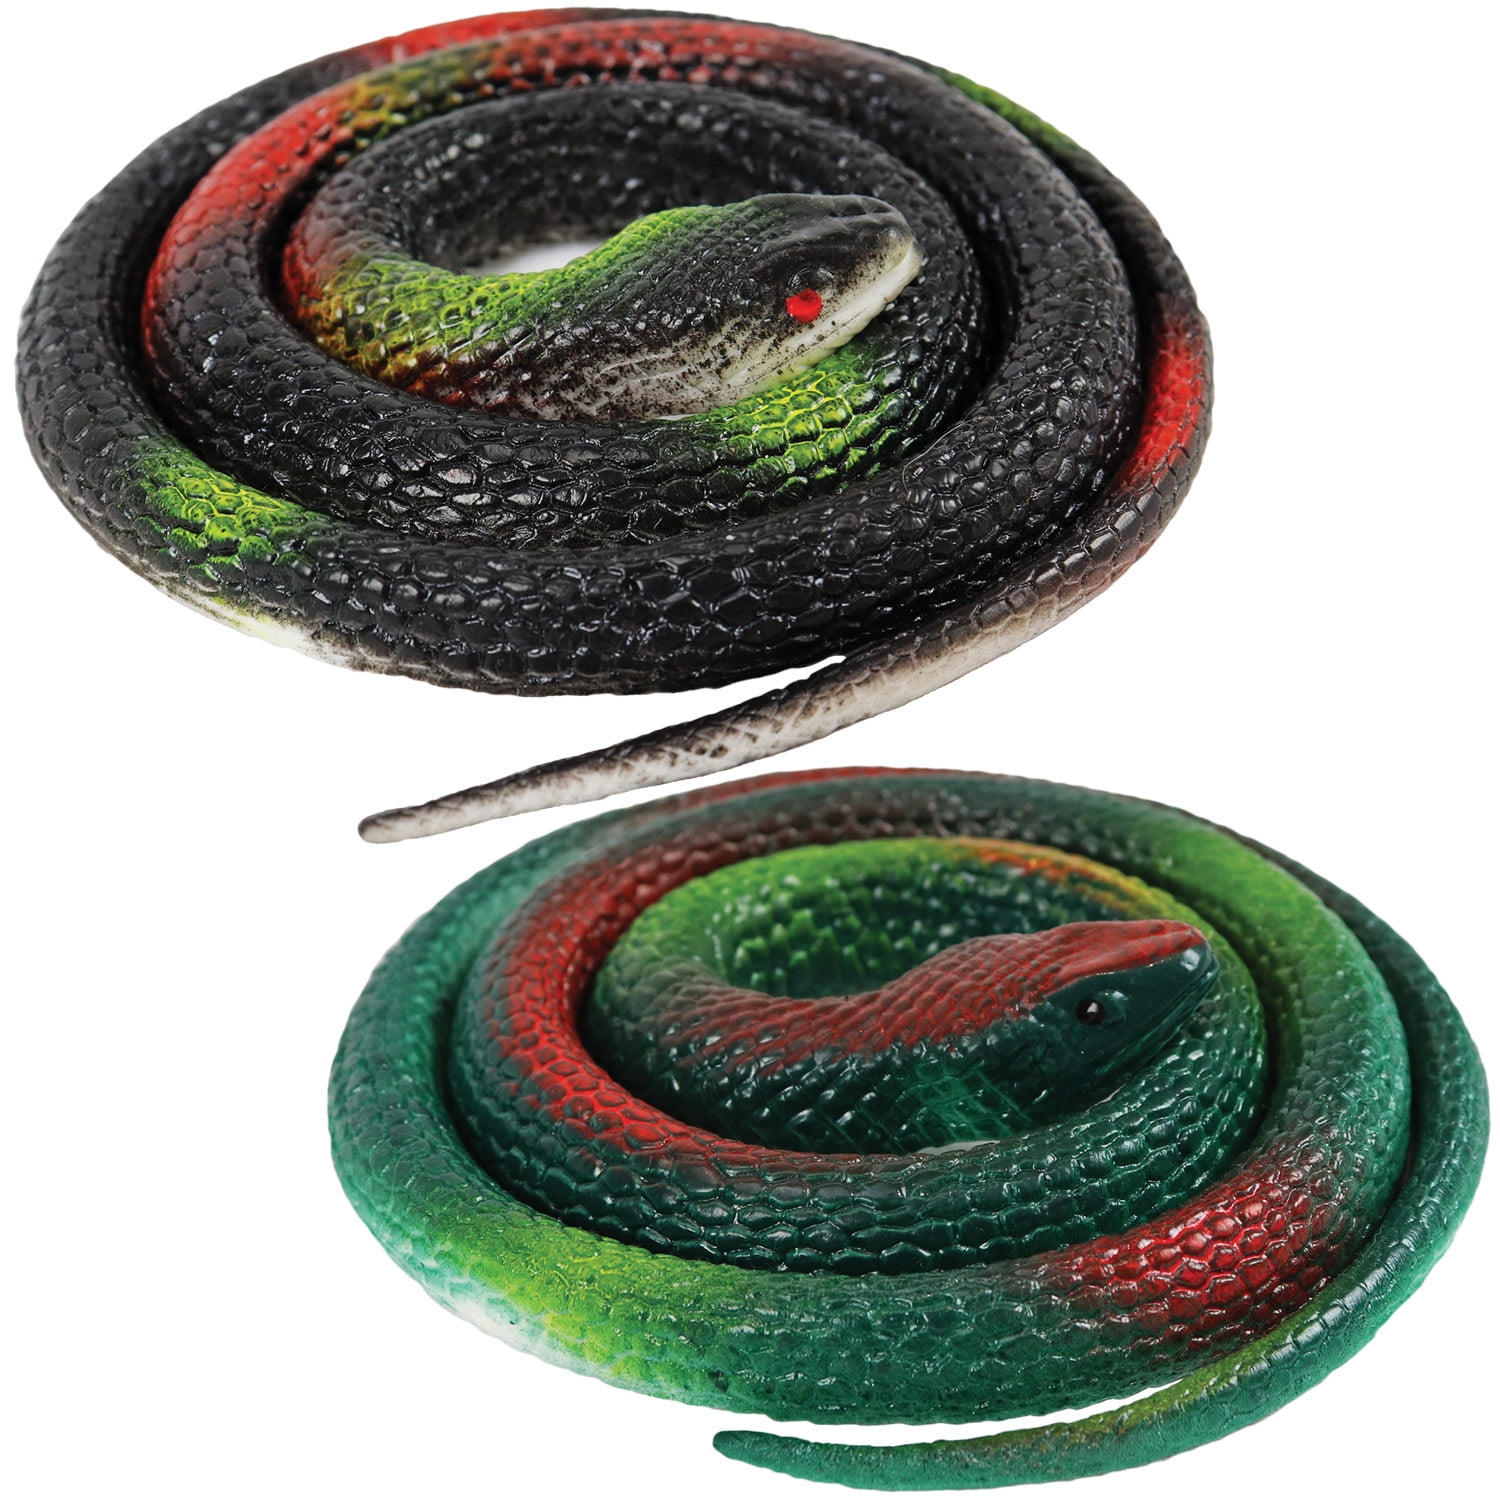 Rhode Island Novelty 24 Green Garden Snakes Great to Keep Birds Away Rubber Toy 